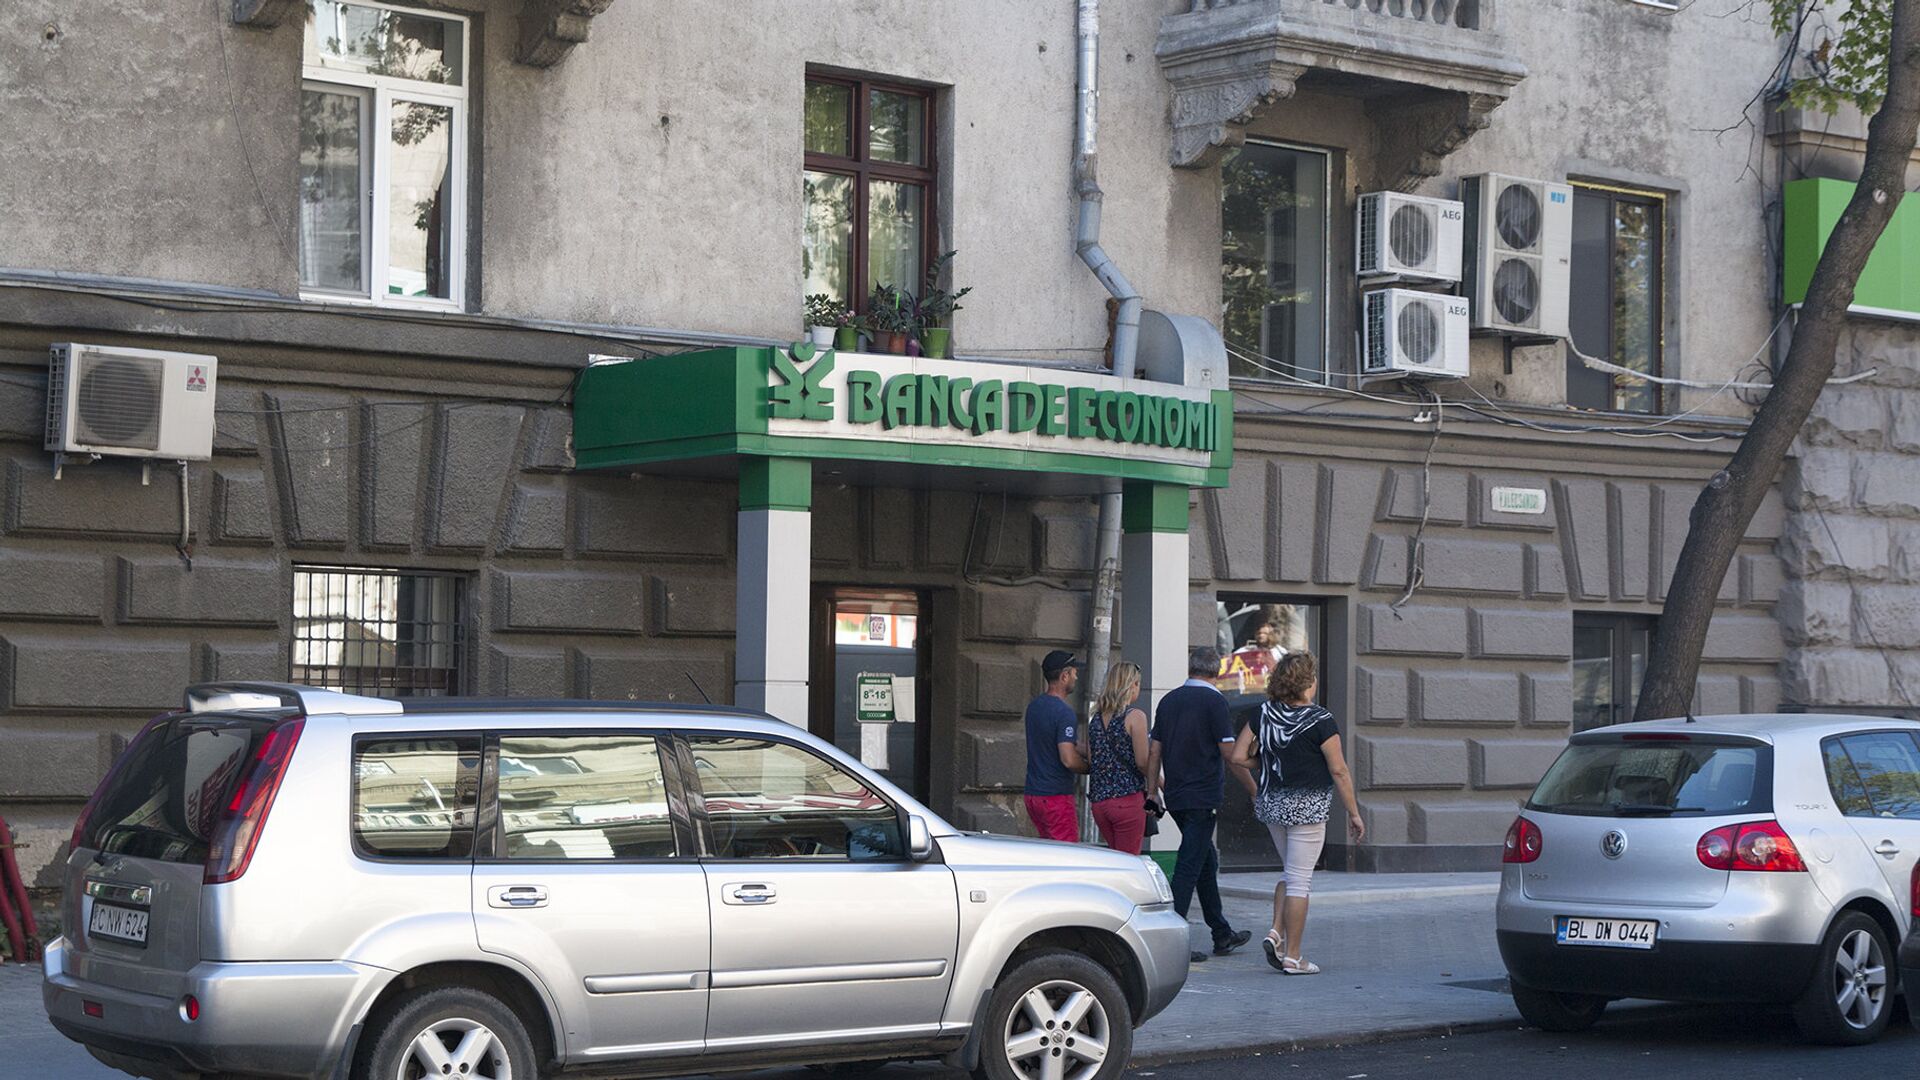 Banca de economii - Sputnik Moldova, 1920, 02.07.2021